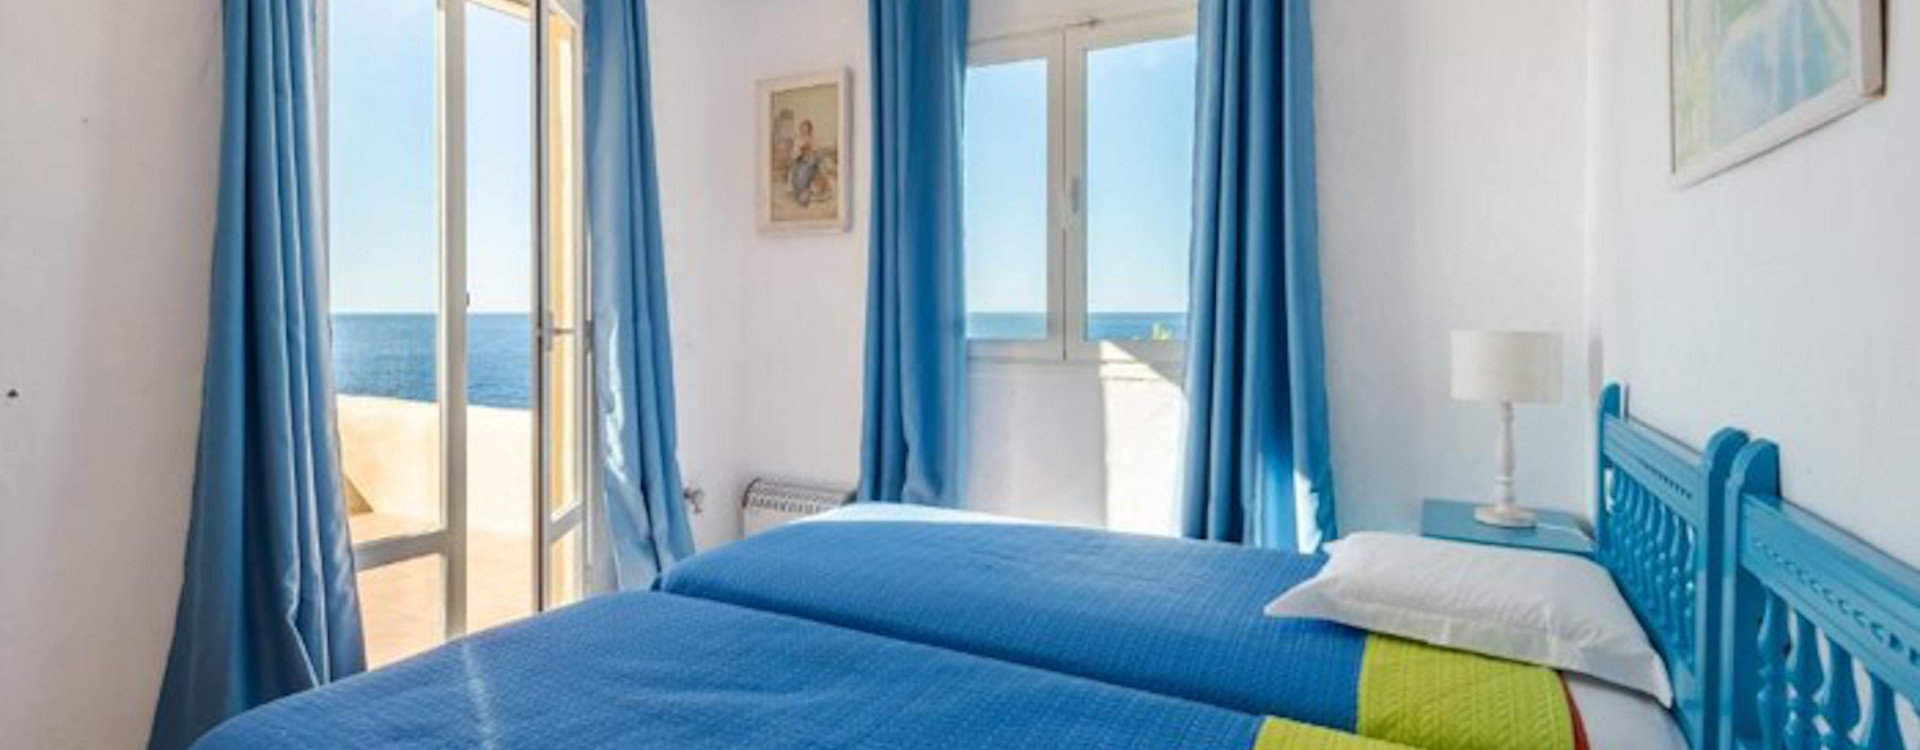 Villa Mar Azul te huur op ibiza - slaapkamer